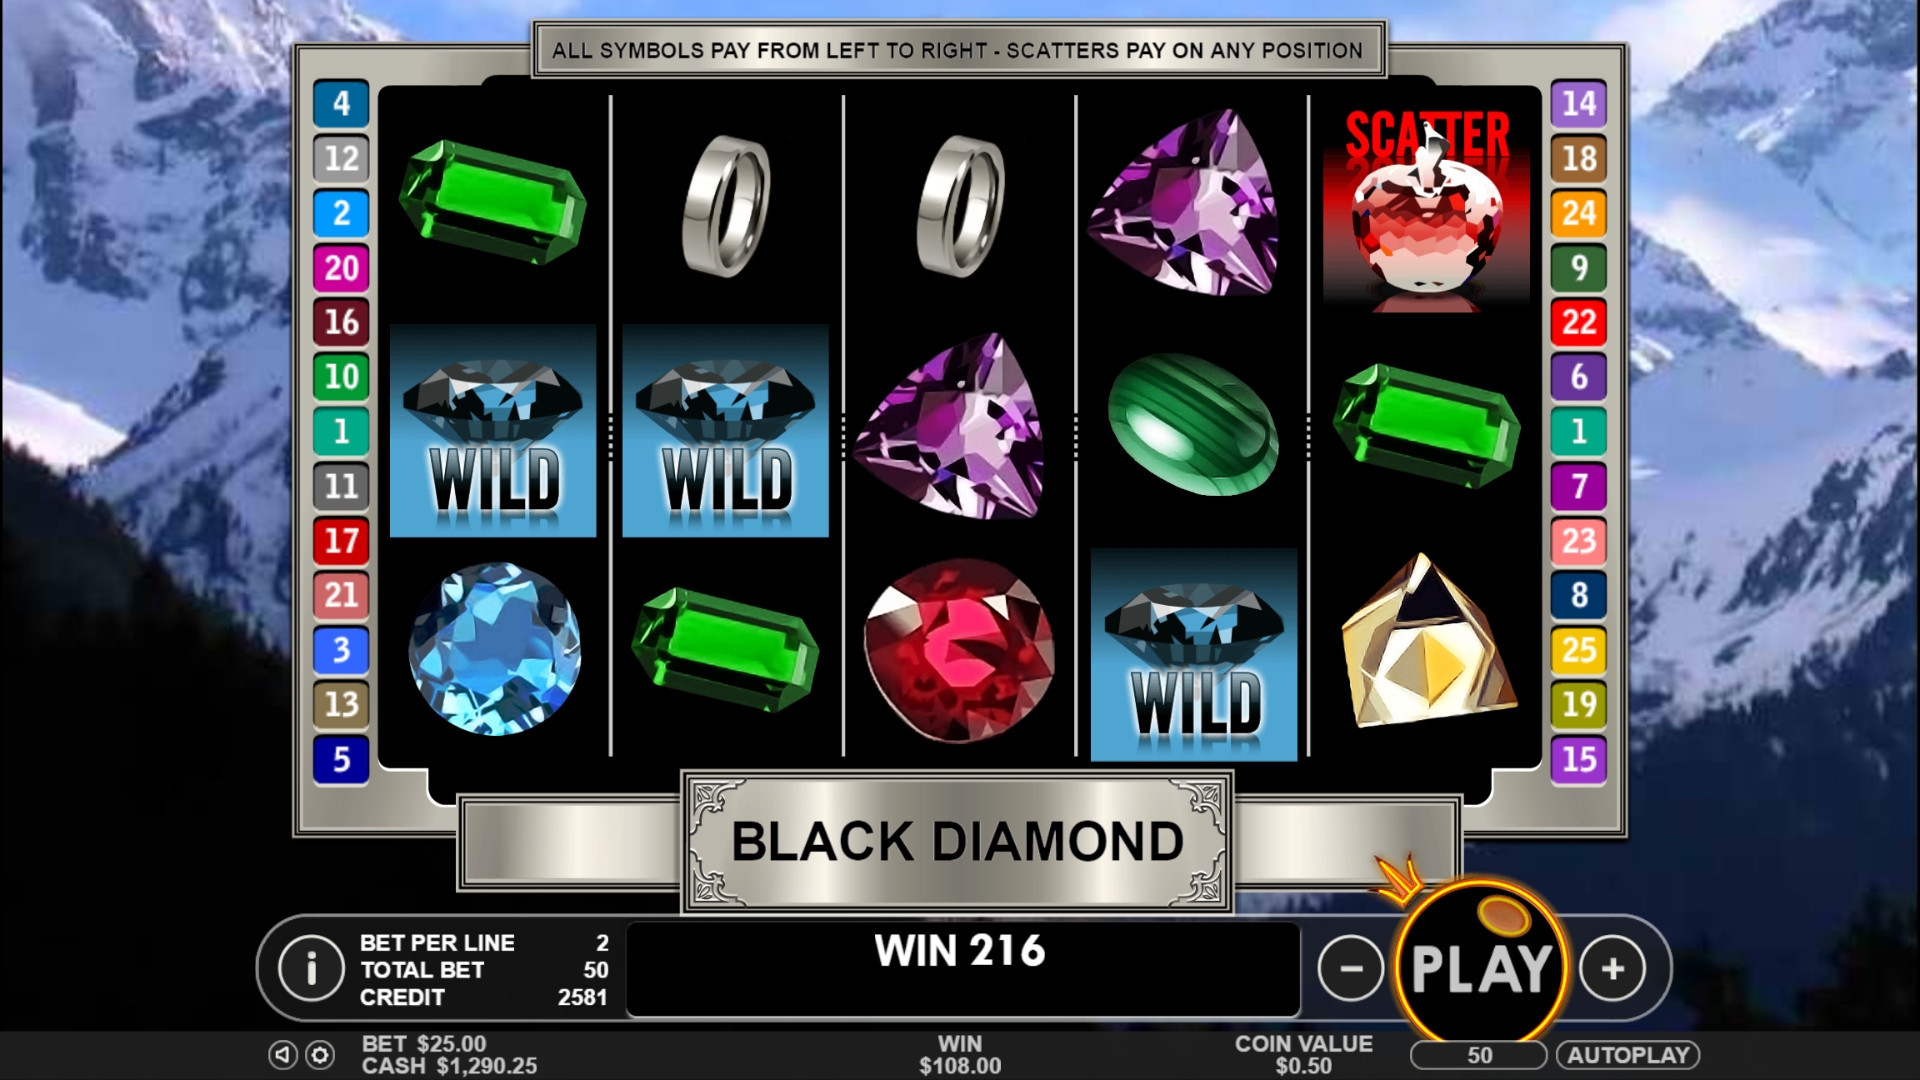 Black Diamond (Black Diamond) from category Slots